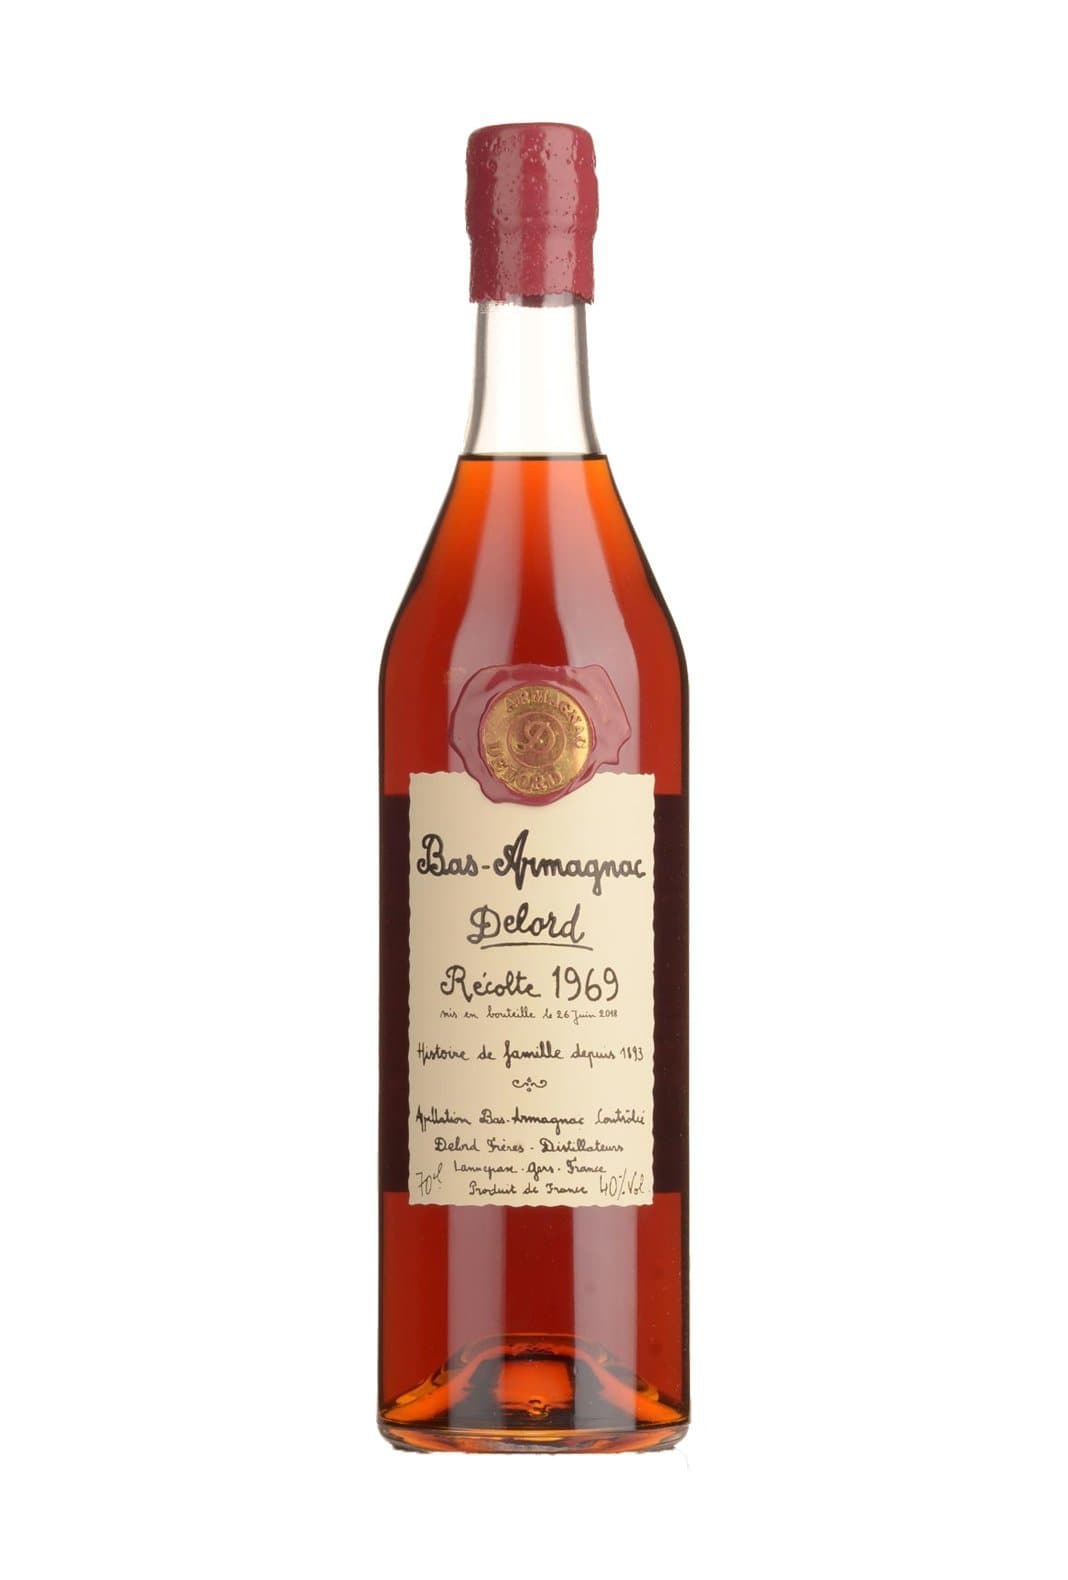 Delord 1969 Bas Armagnac 40% 700ml | Brandy | Shop online at Spirits of France